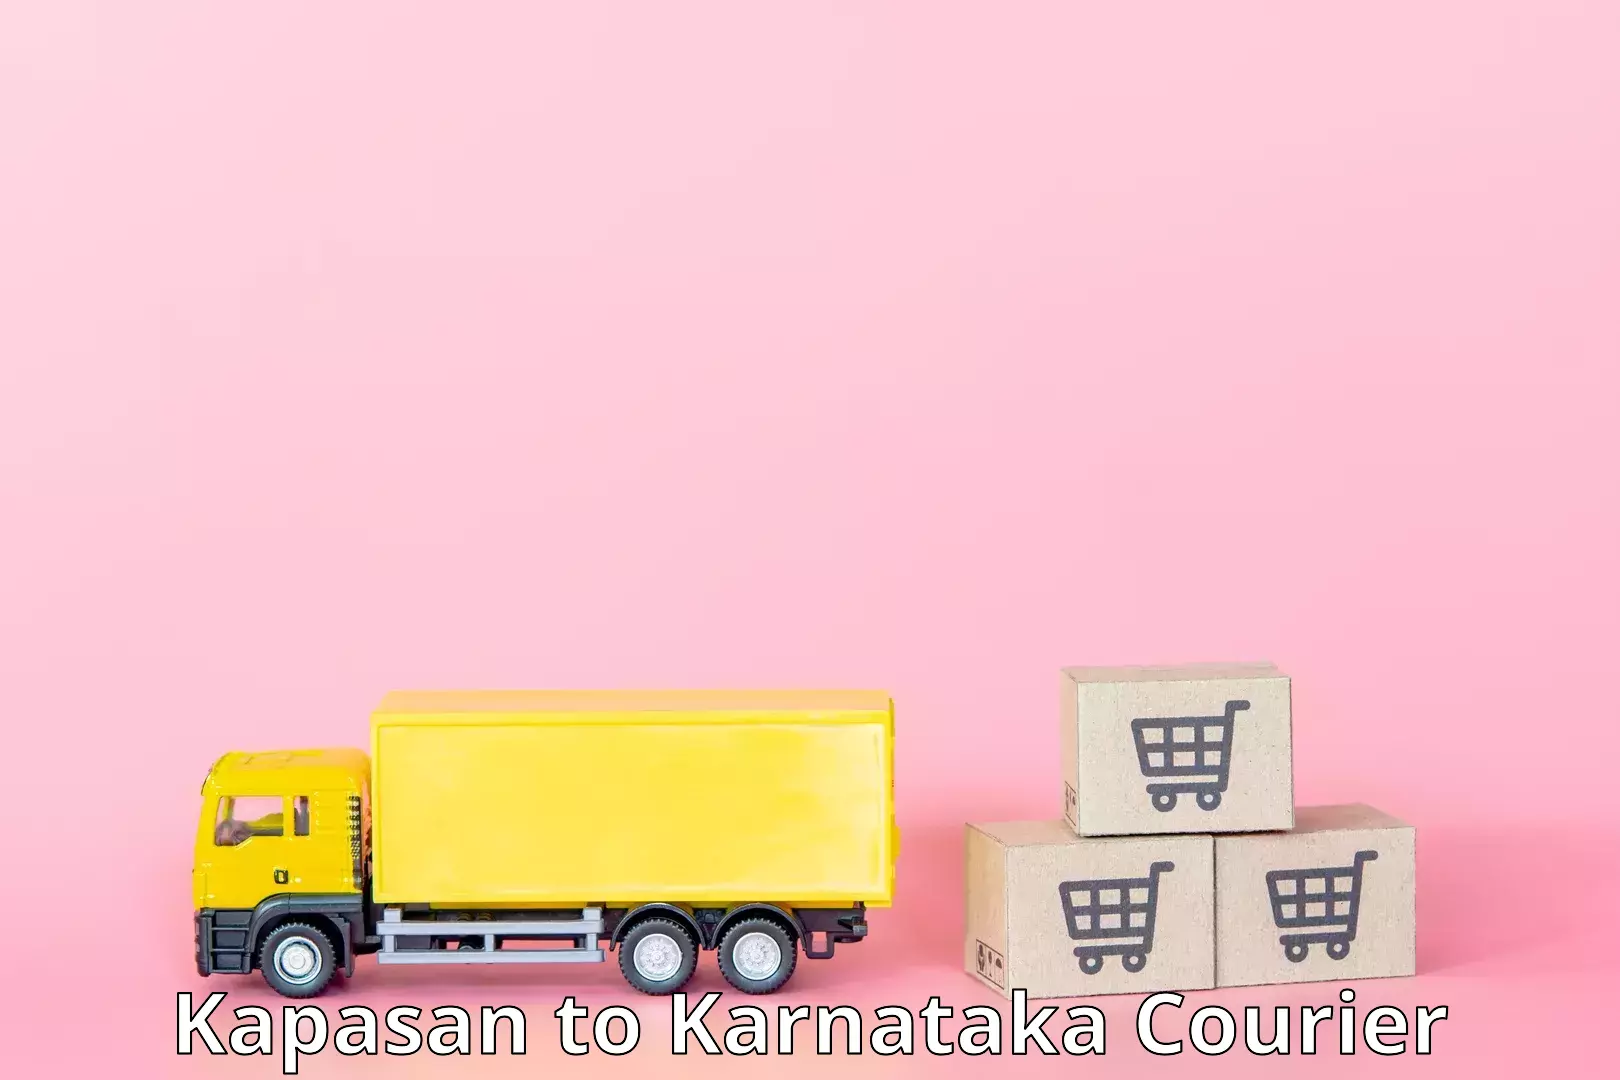 Personalized courier experiences Kapasan to yedrami